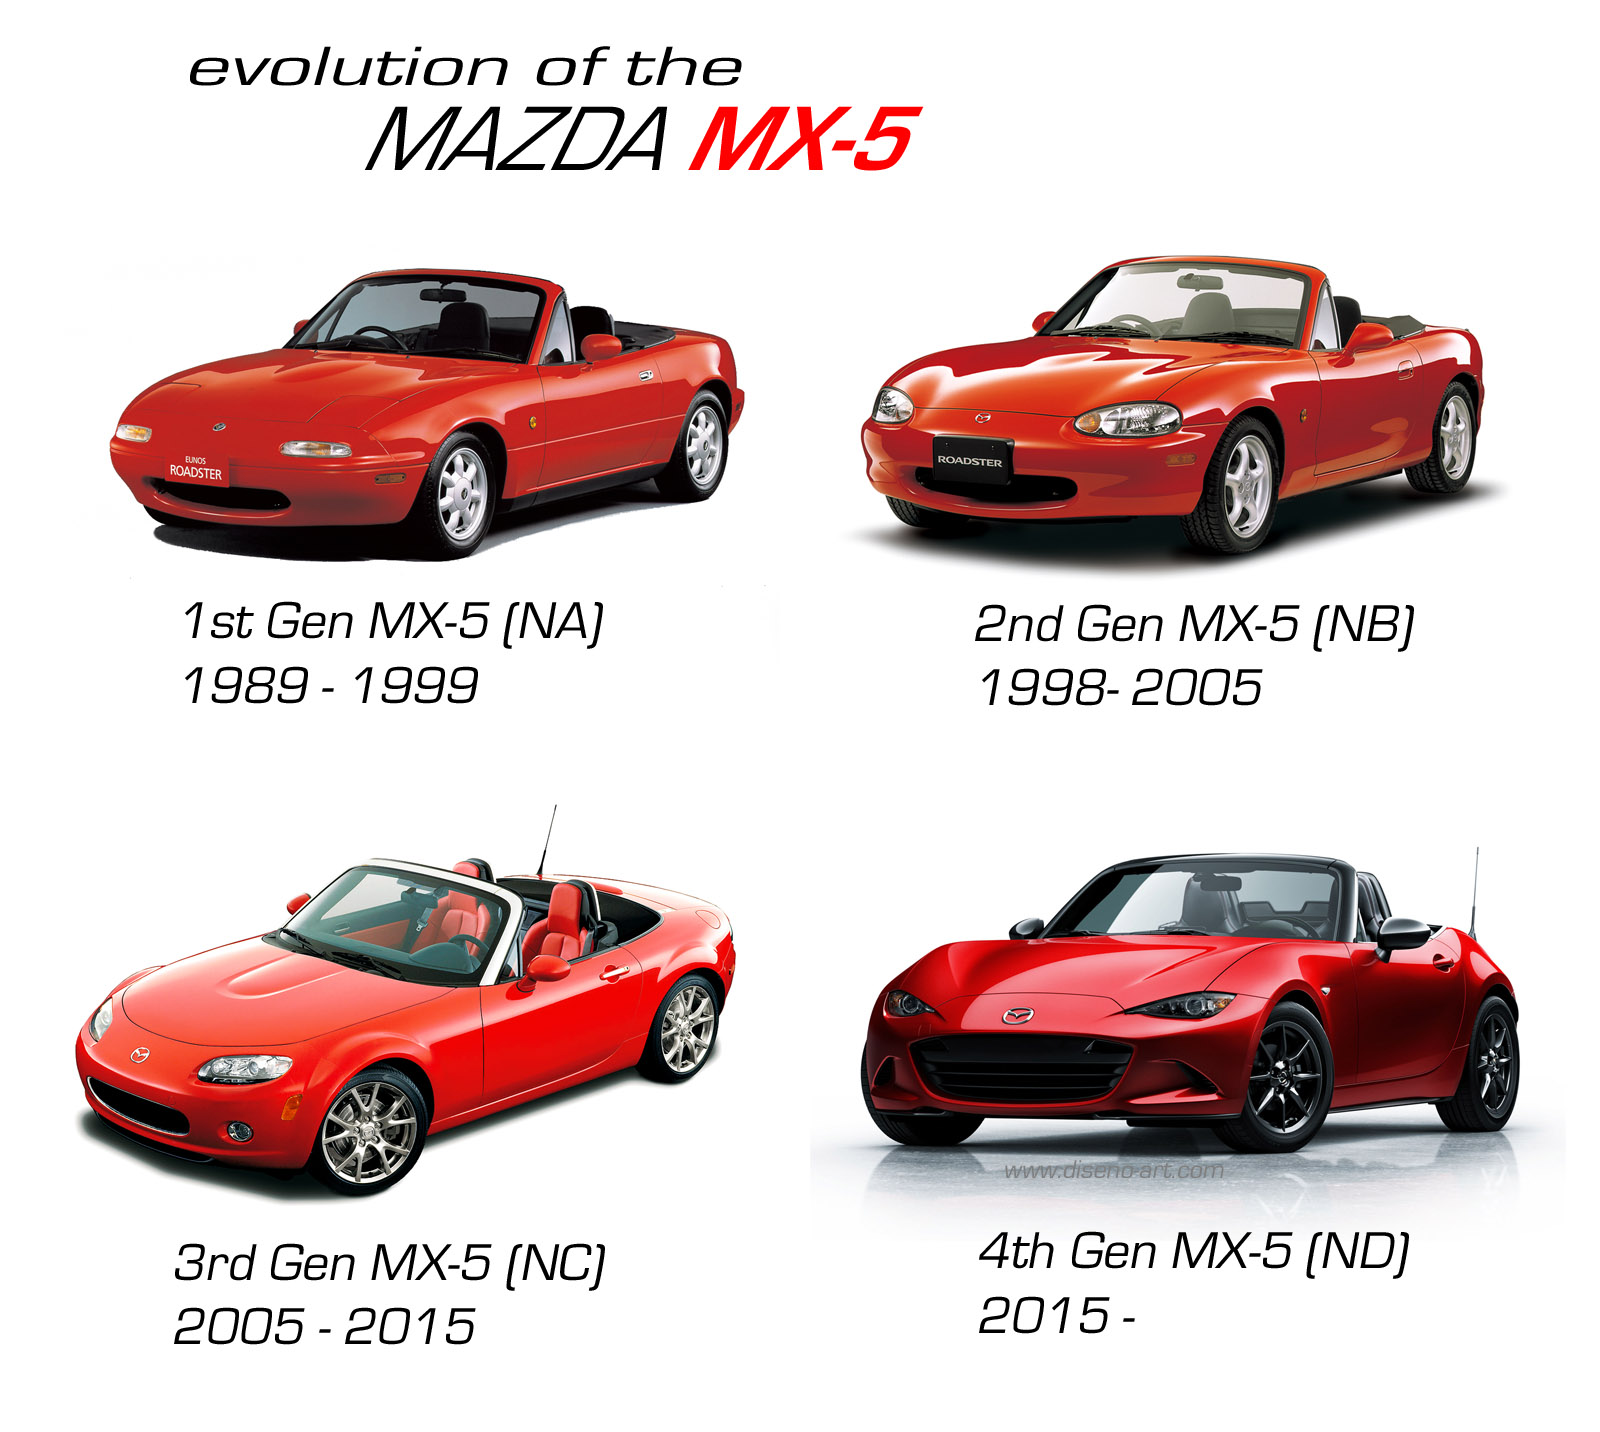 The Mazda MX-5 Miata: How an Iconic Sports Car Evolved